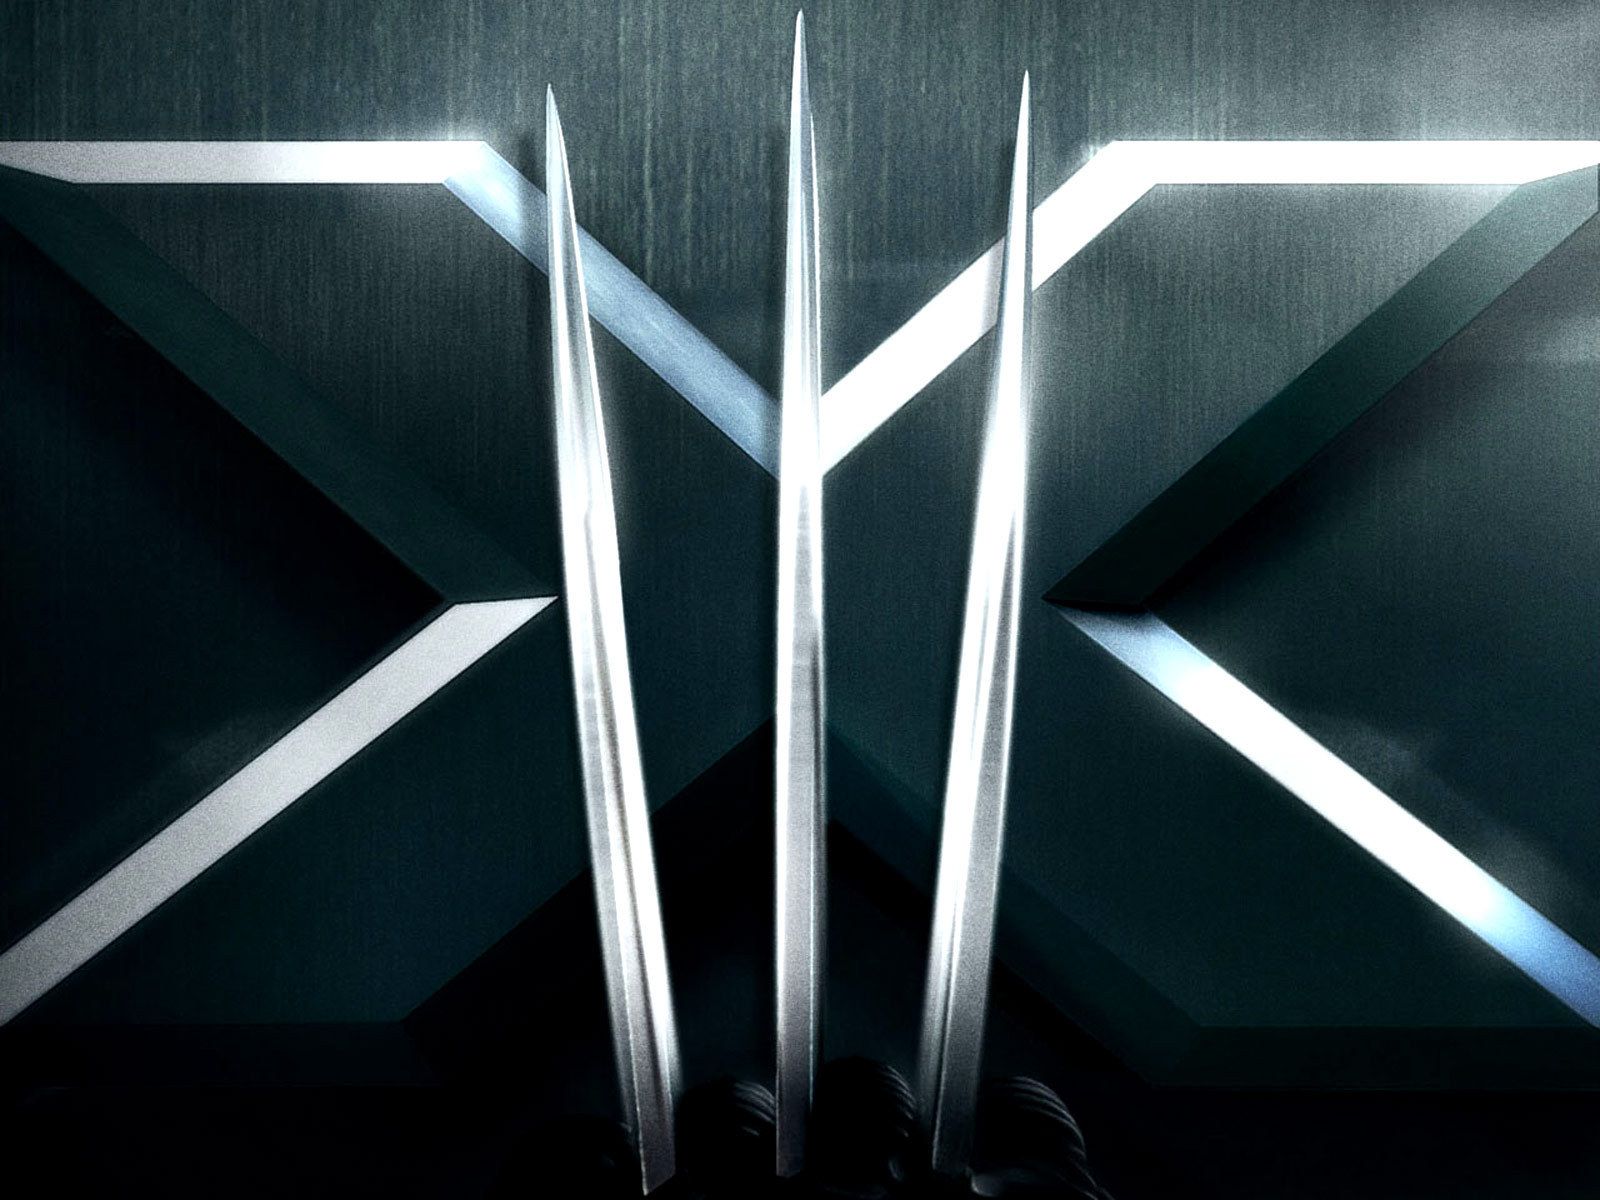 Wolverine - X men THE MOVIE Wallpaper 19125737 - Fanpop